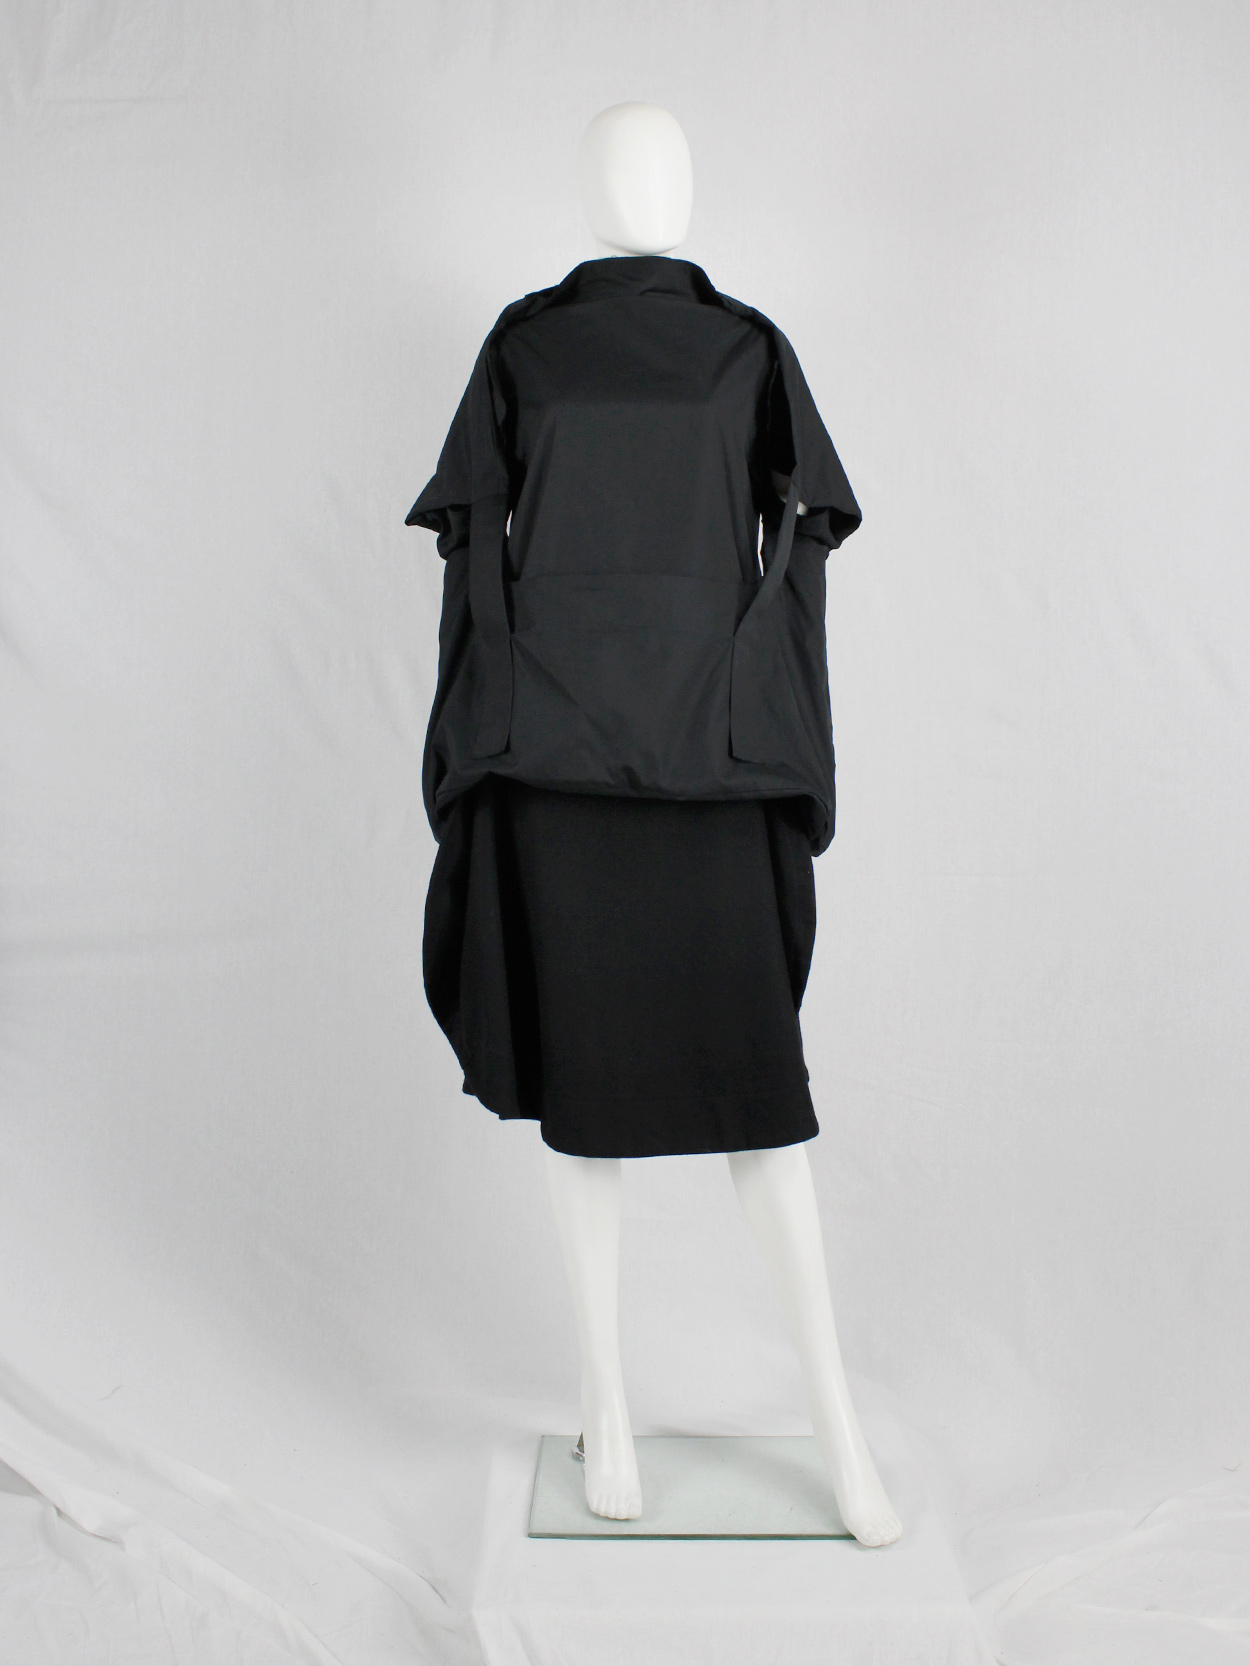 vaniitas vintage Comme des Garcons black sculptural top with strapped pouch spring 2014 (1)